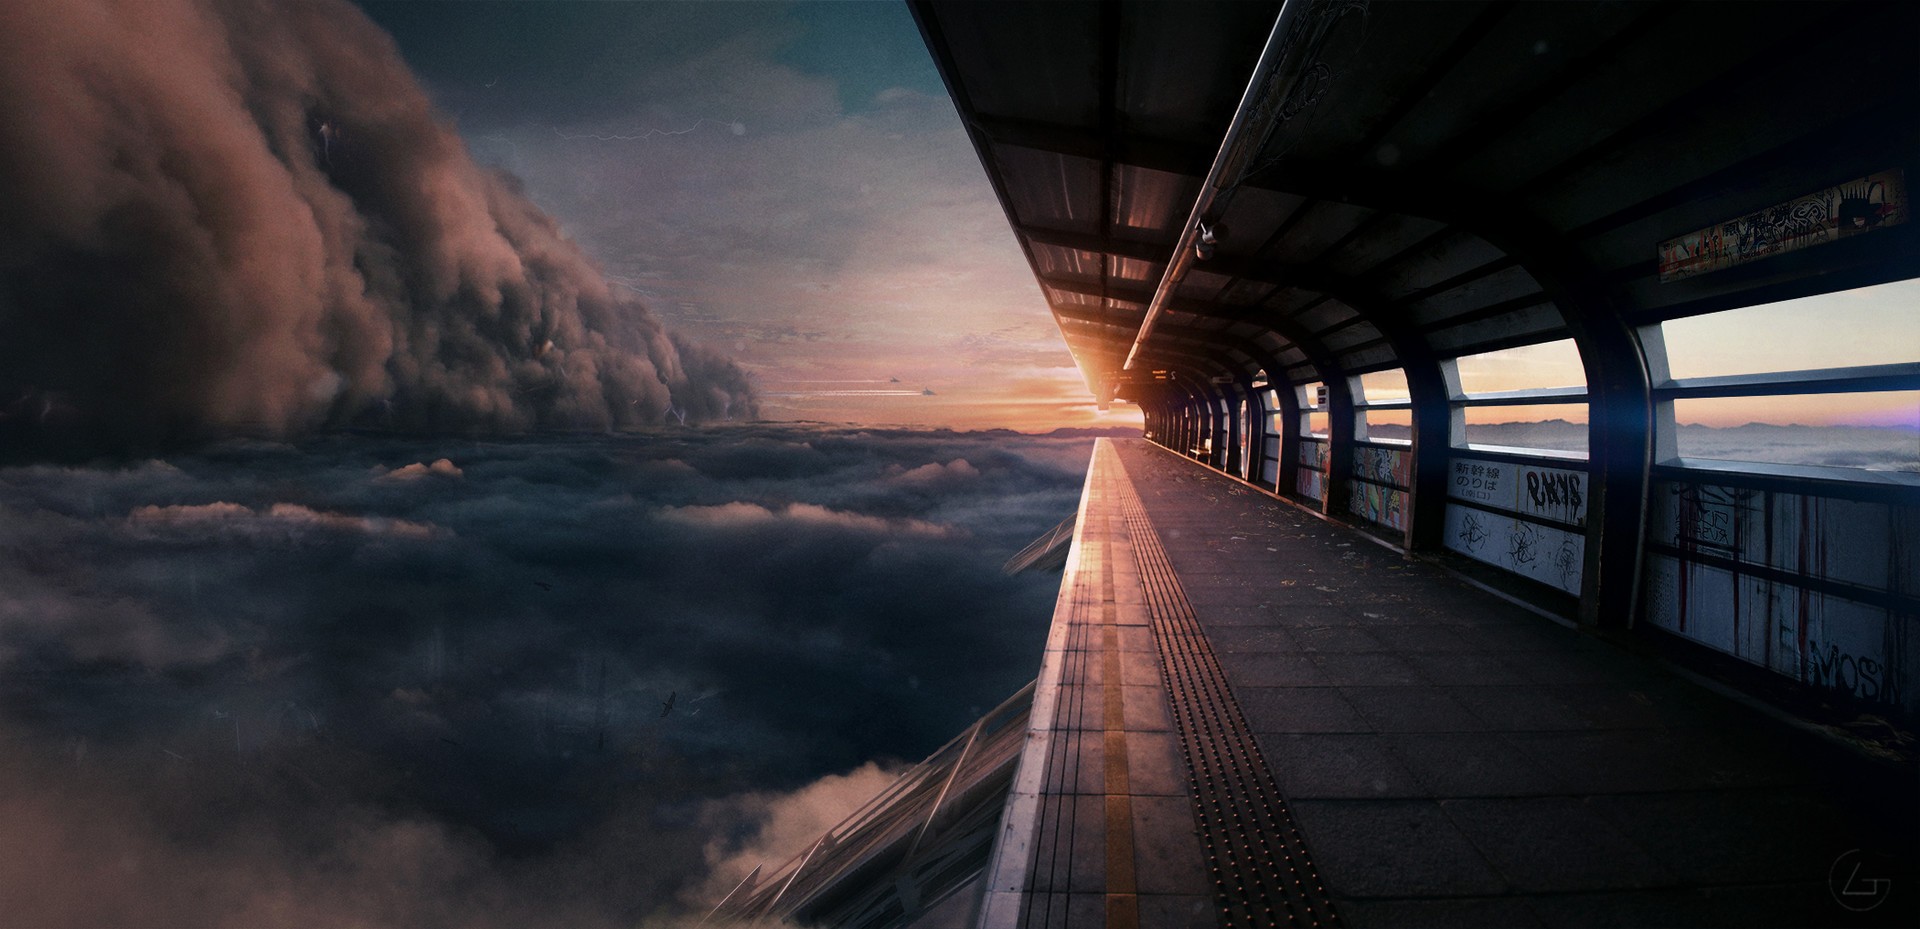 General 1920x929 skyline futuristic clouds train station cliff landscape spaceship digital art sky